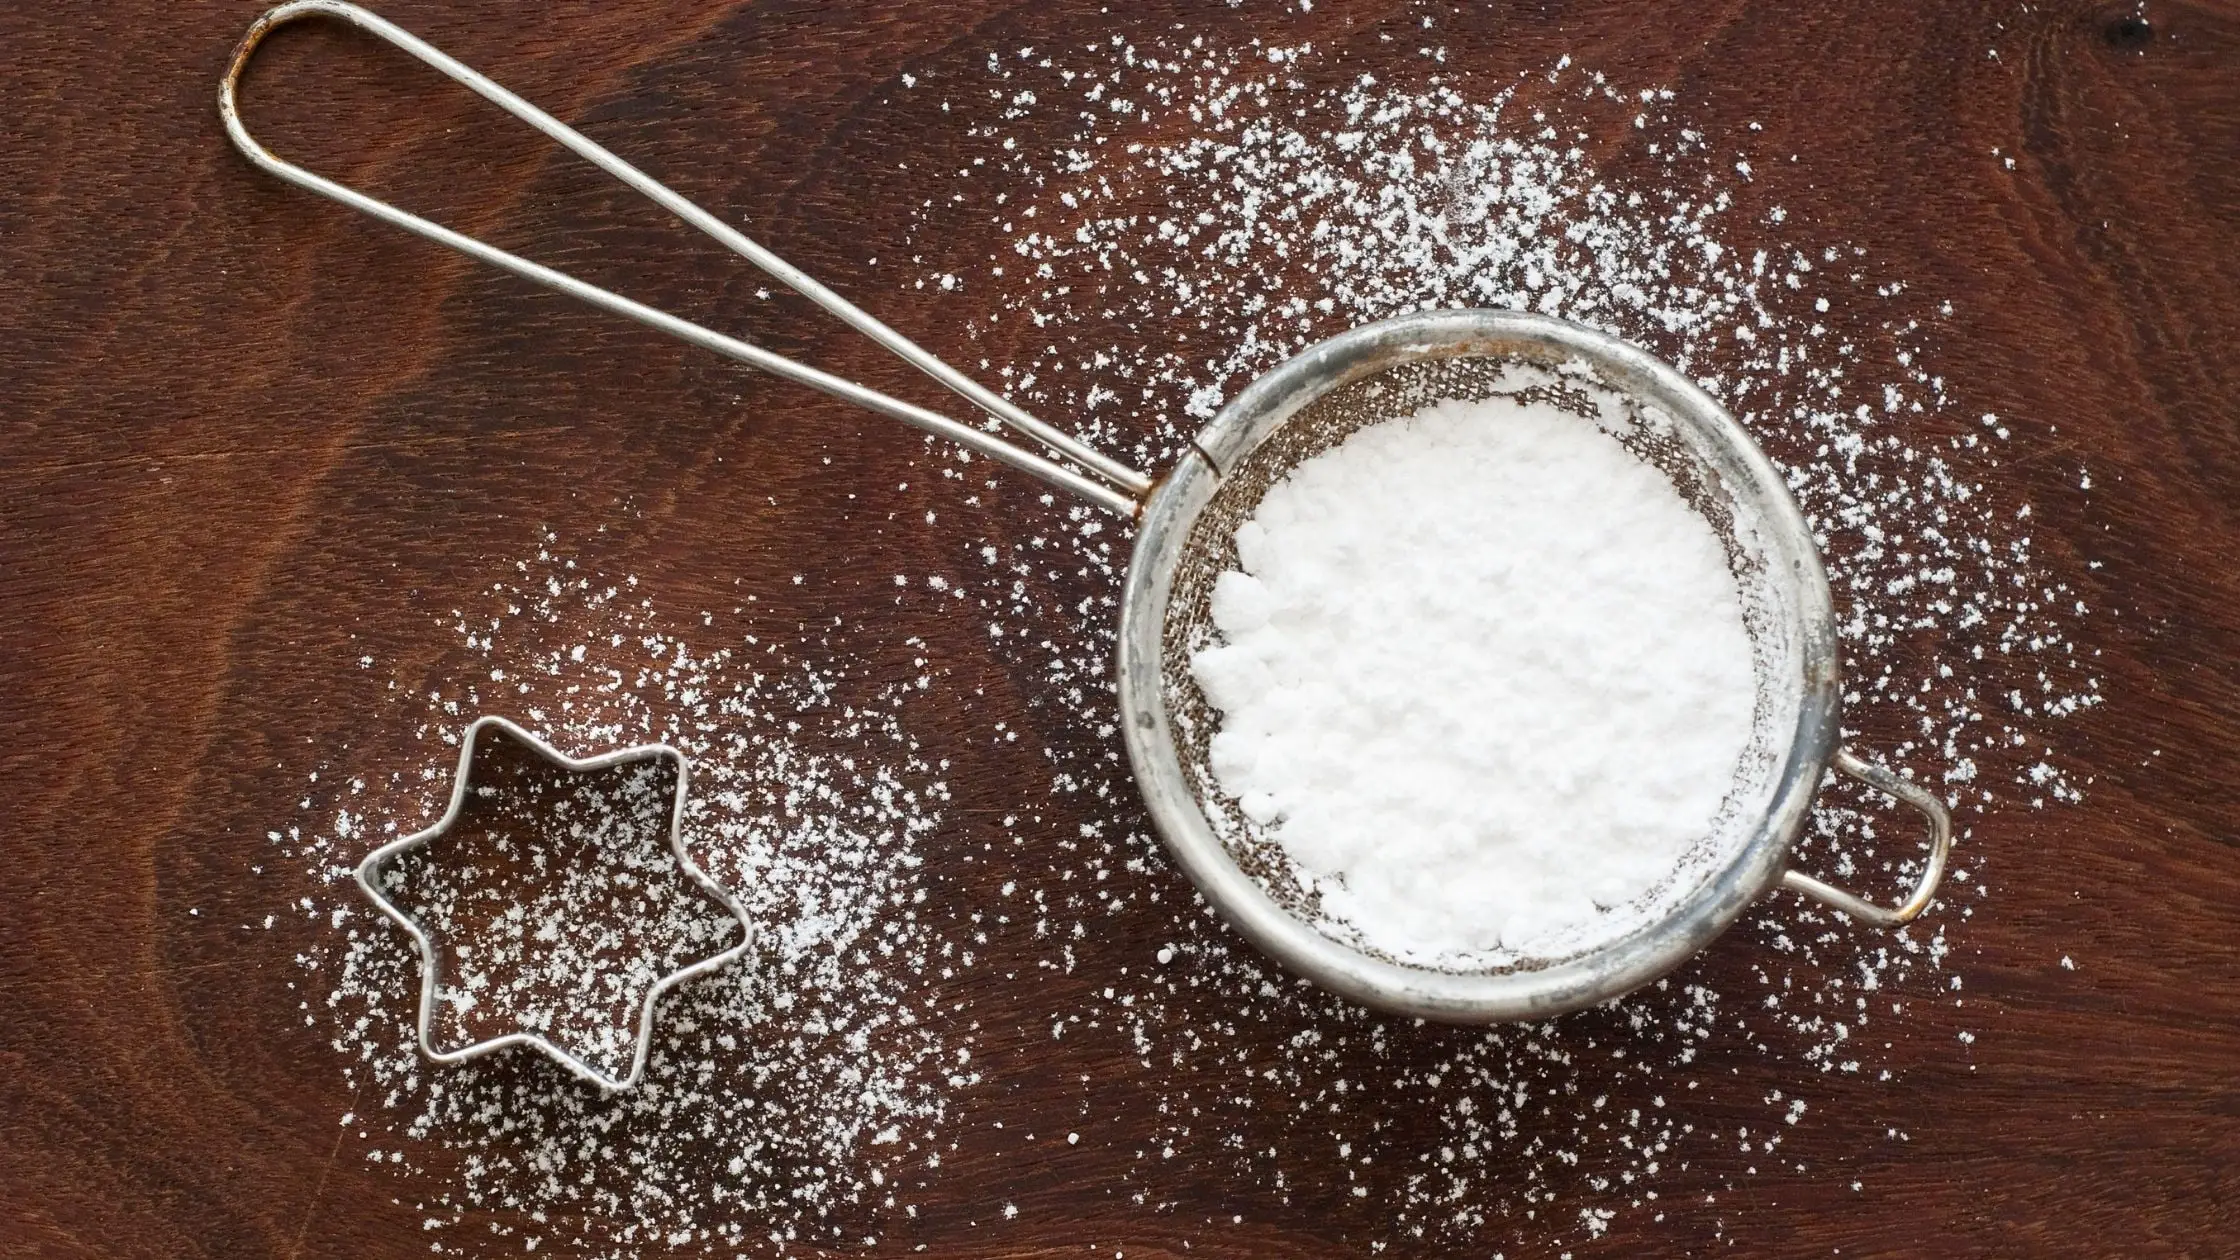 How To Keep Sugar Fresh